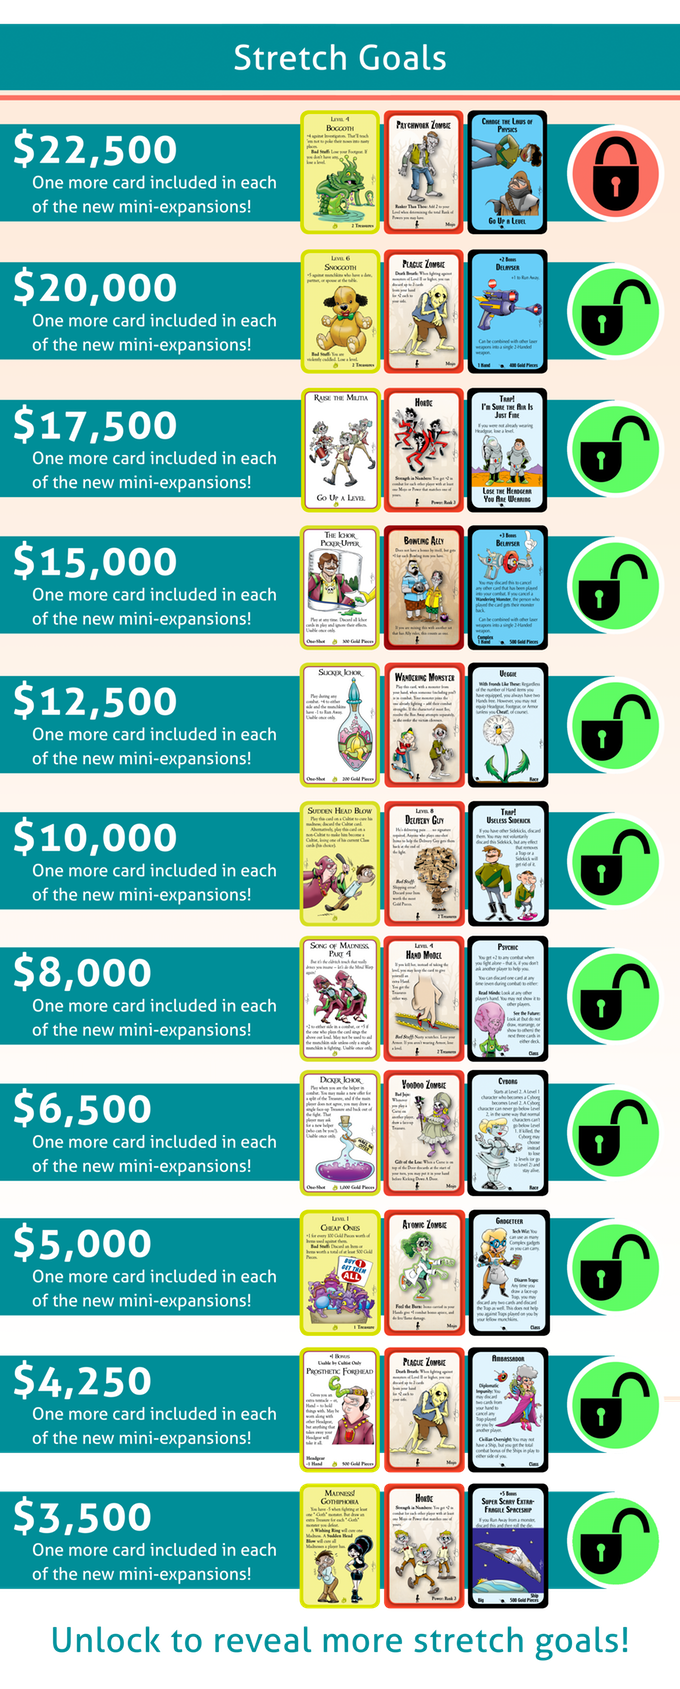 Three Mini-Expansions for Munchkin! by Steve Jackson Games — Kickstarter